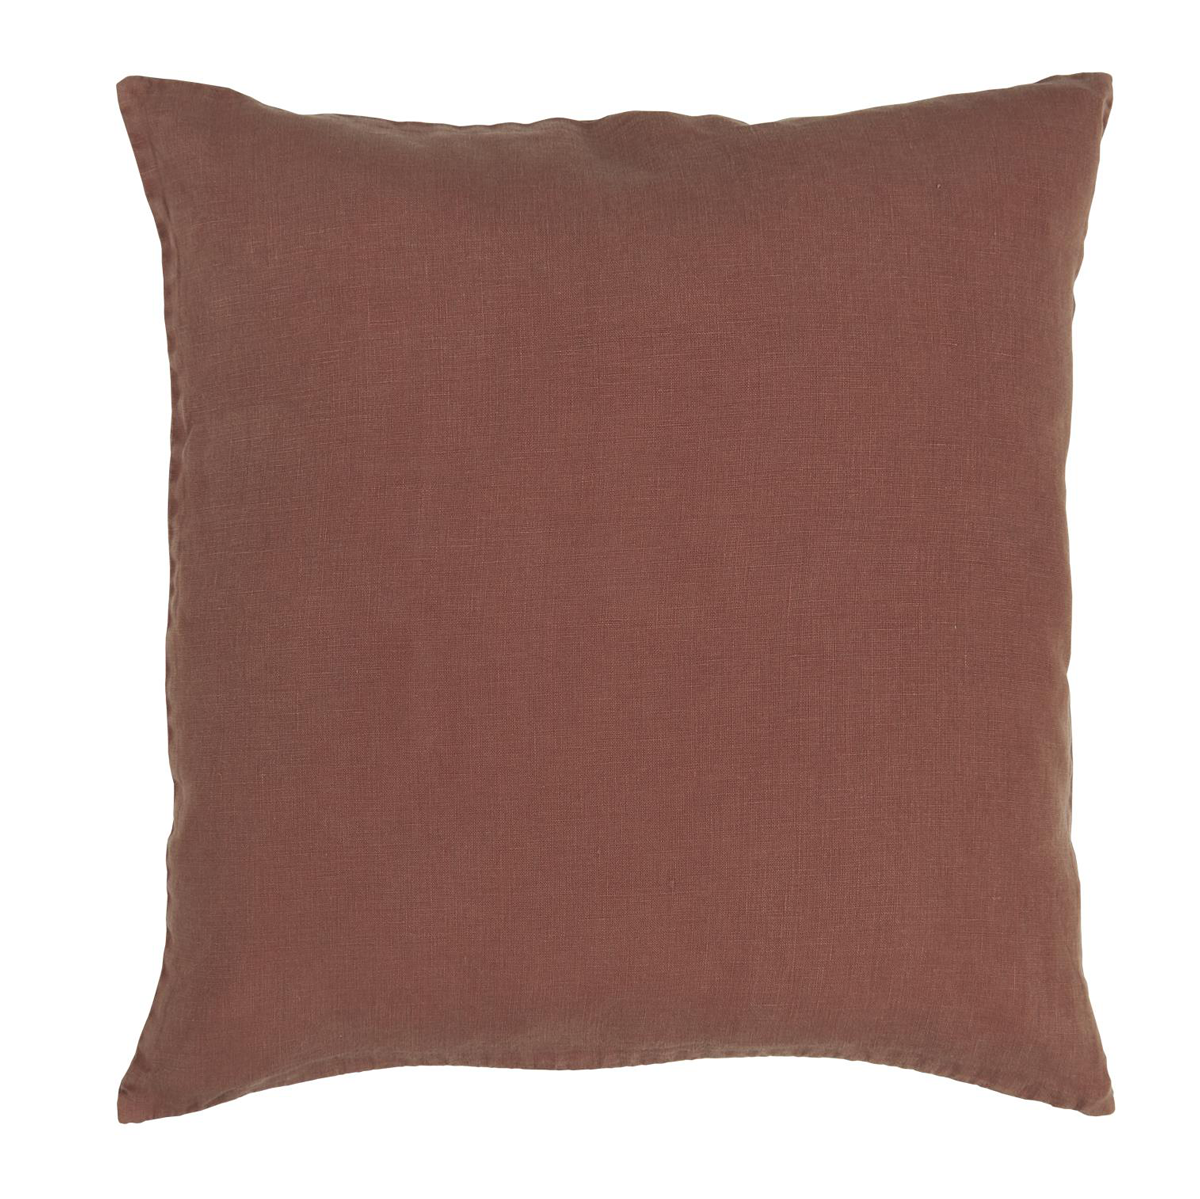 IB Laursen Linen Rust square cushion 50cm x 50cm 6203-70